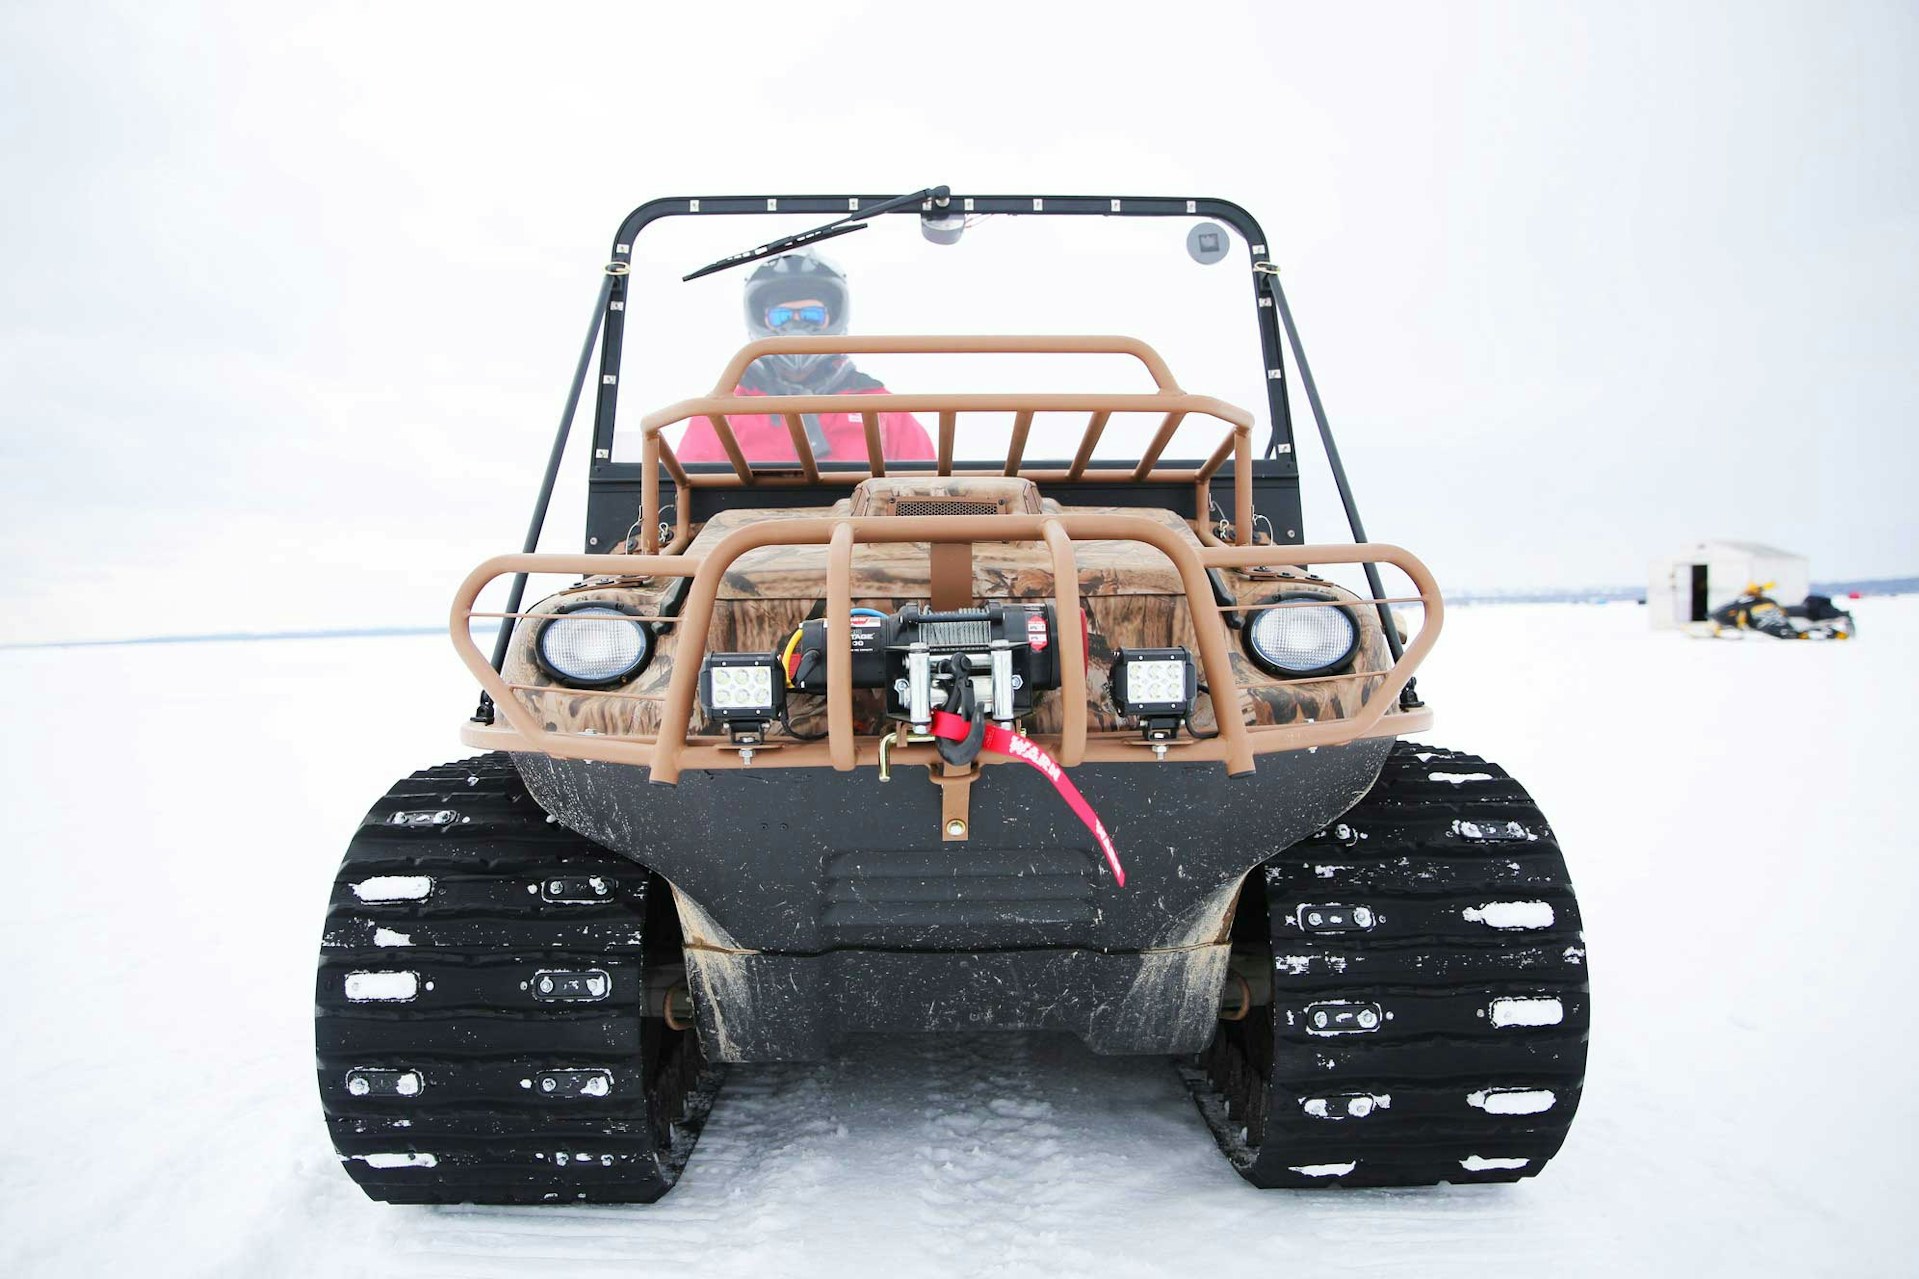 An all terrain vehicle on the ice